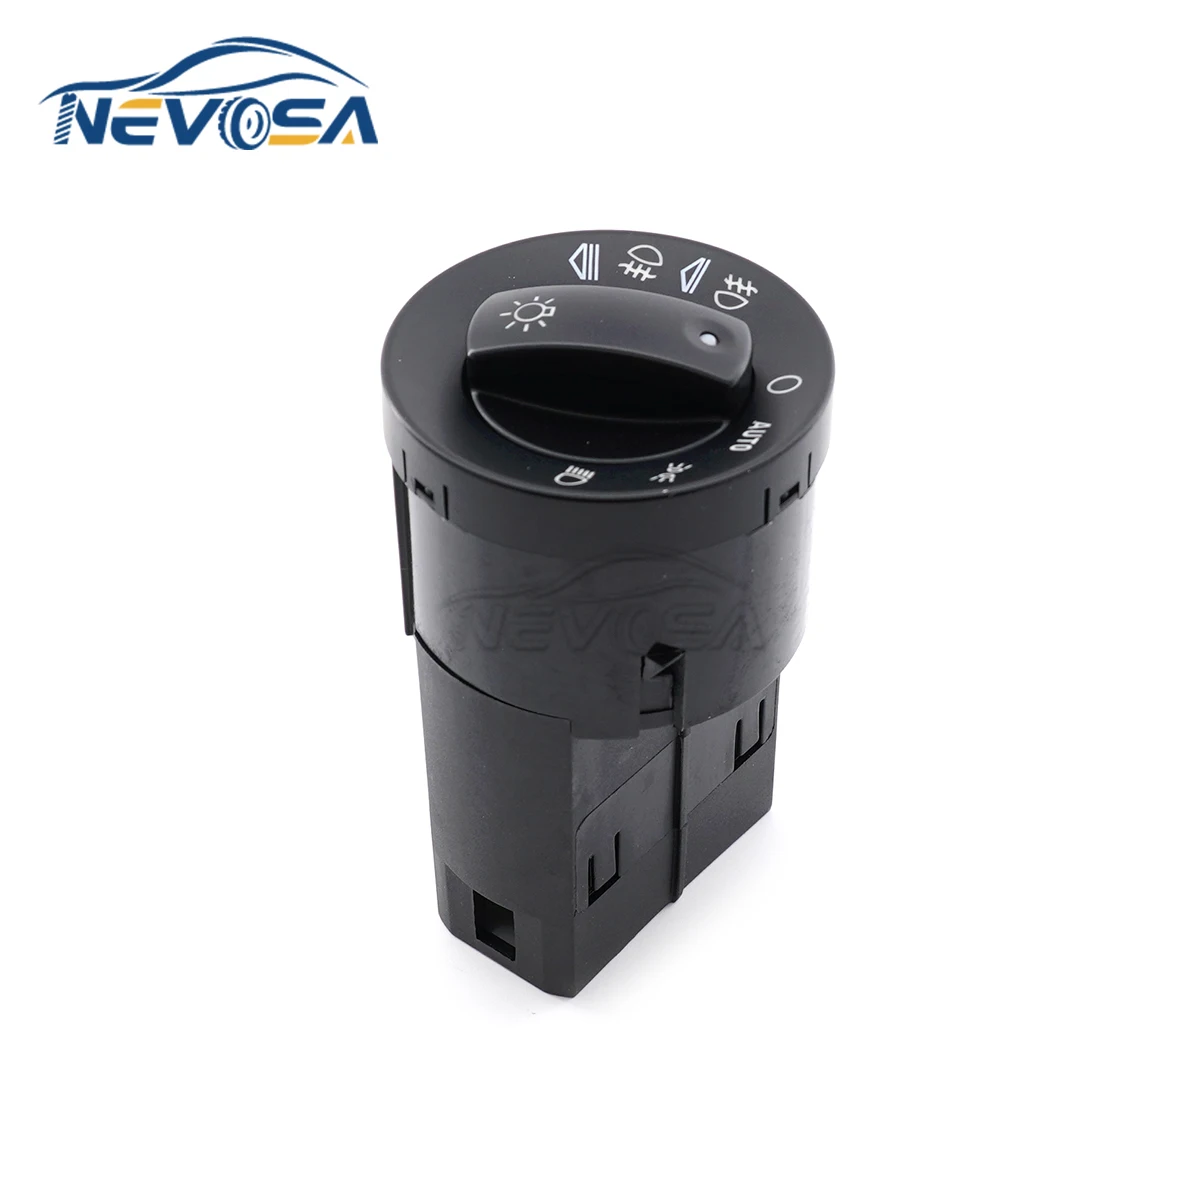 

NEVOSA 8E0941531B Fog Lamp Headlight Switch Button For Audi A4 8E B6 B7 2002-2005 Car Parts Accessories